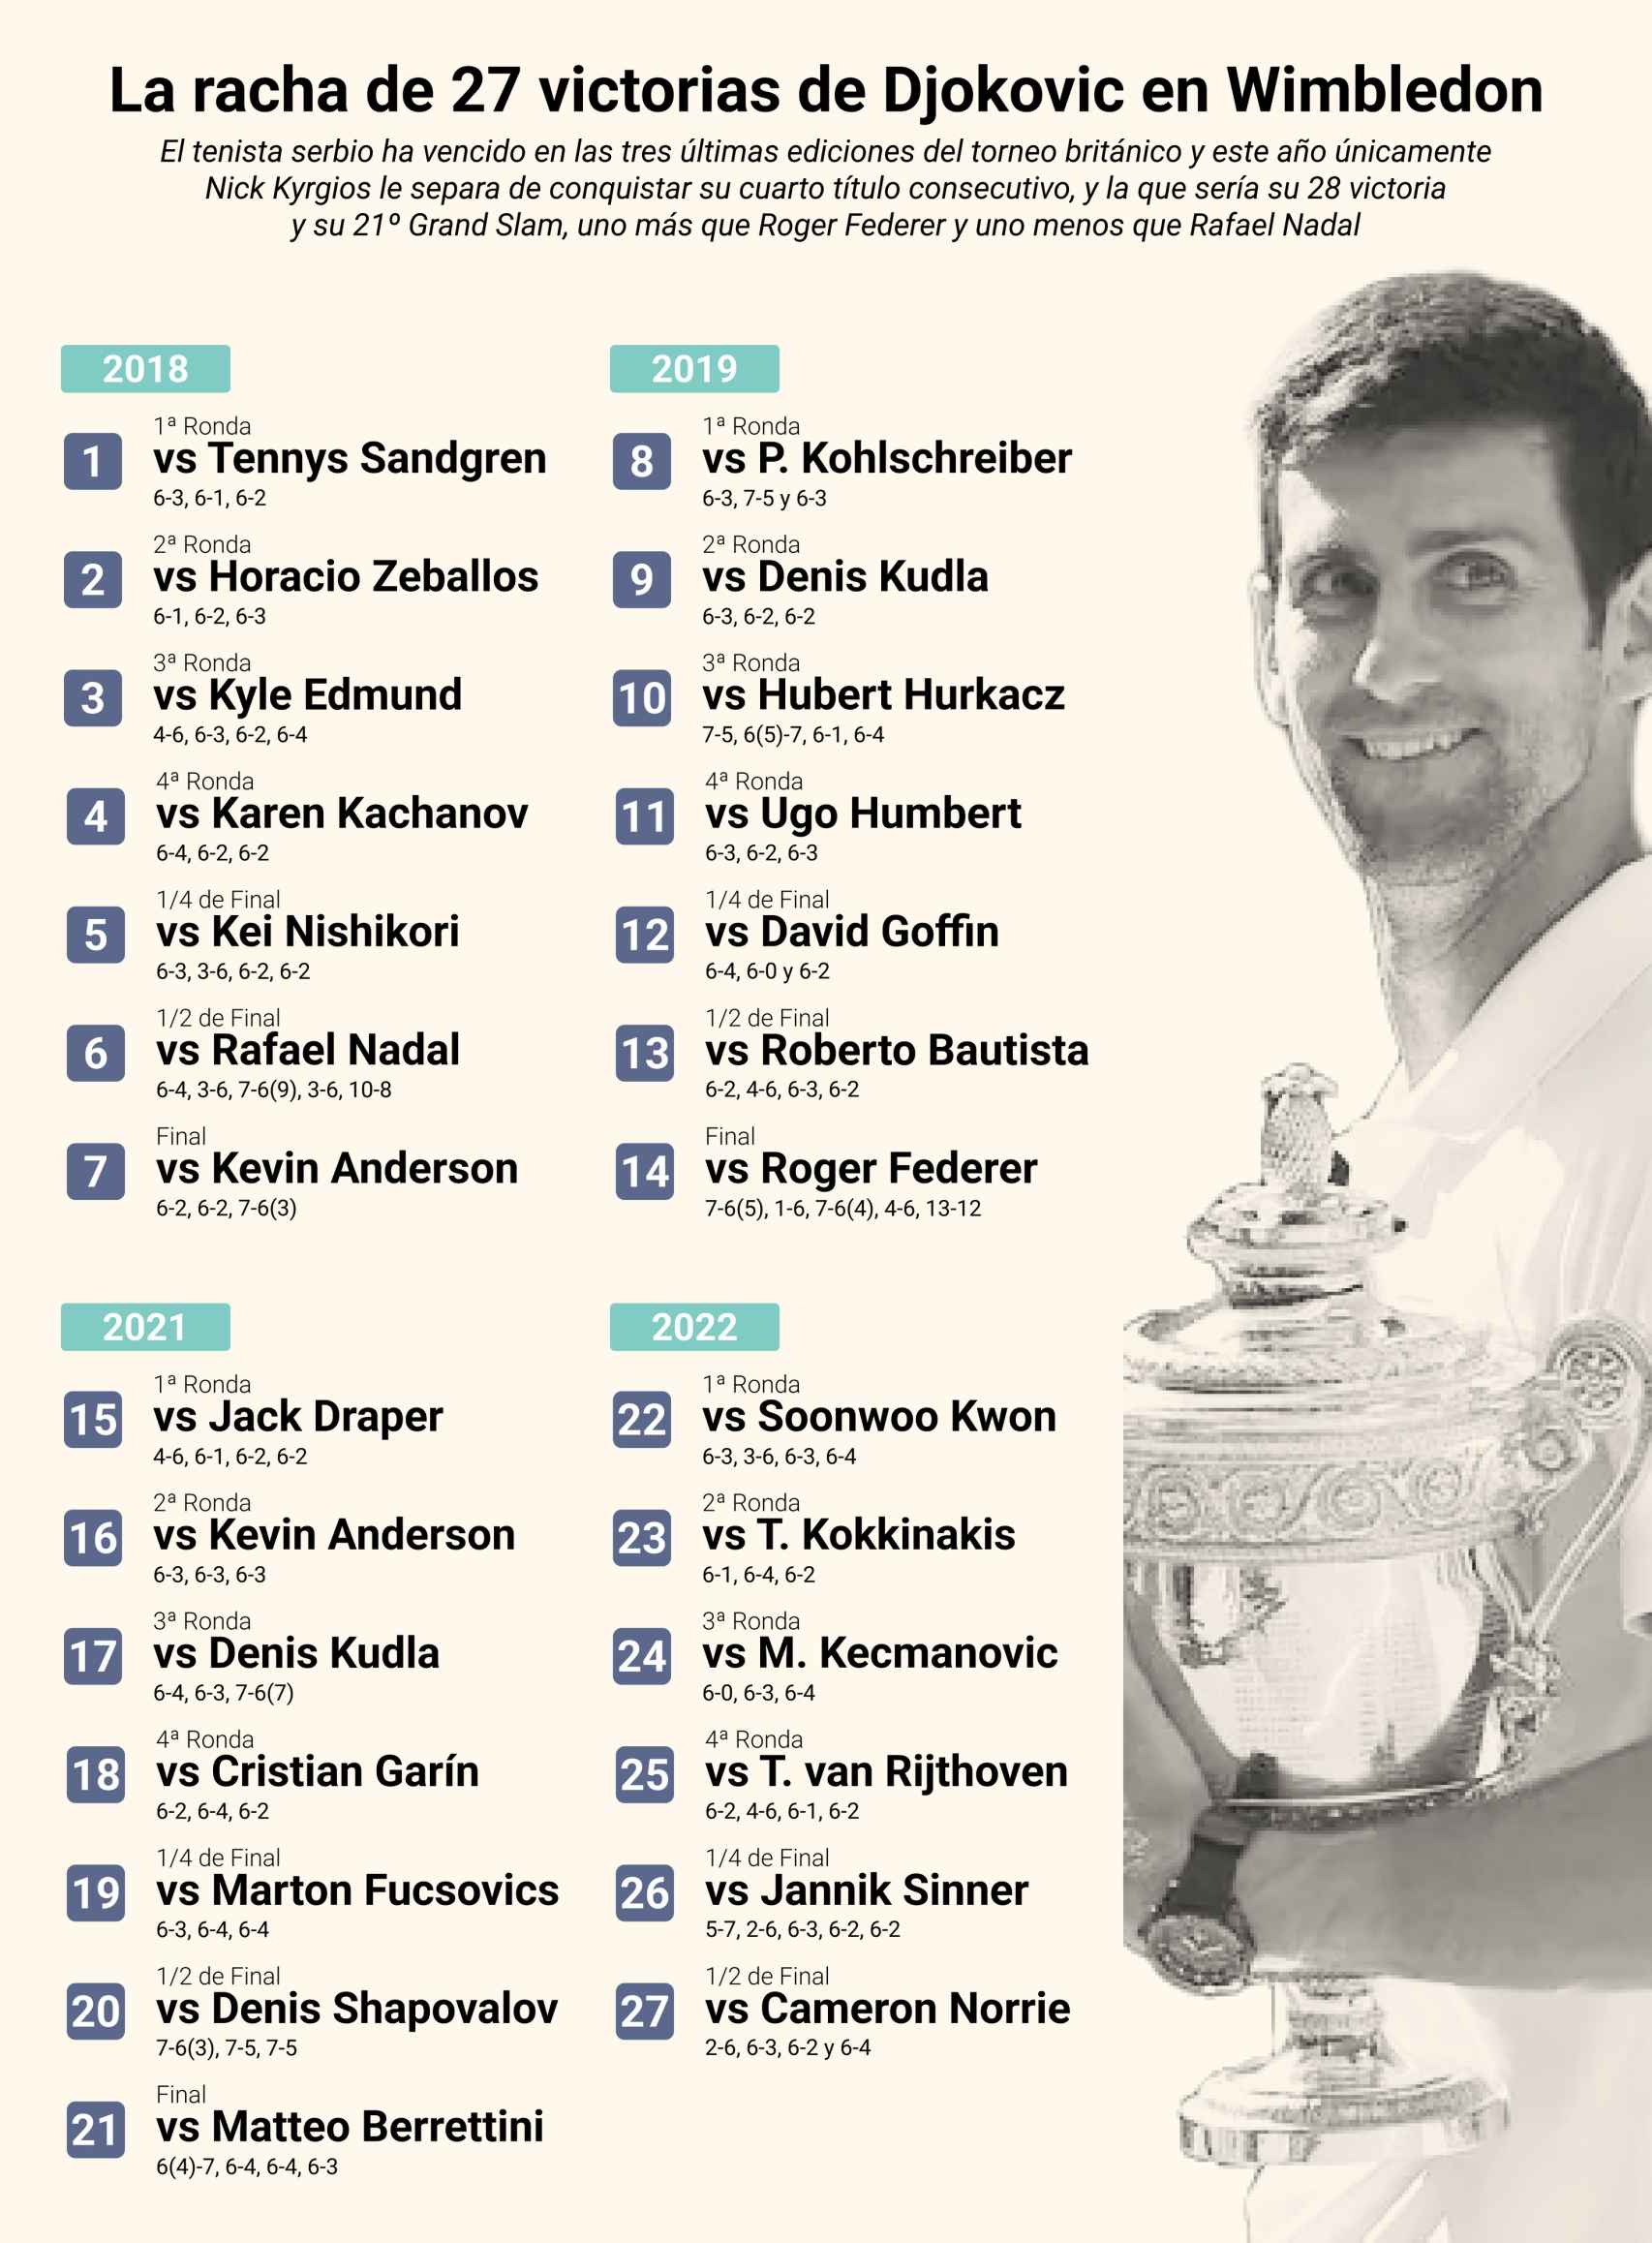 La racha de 27 victorias de Djokovic en Wimbledon